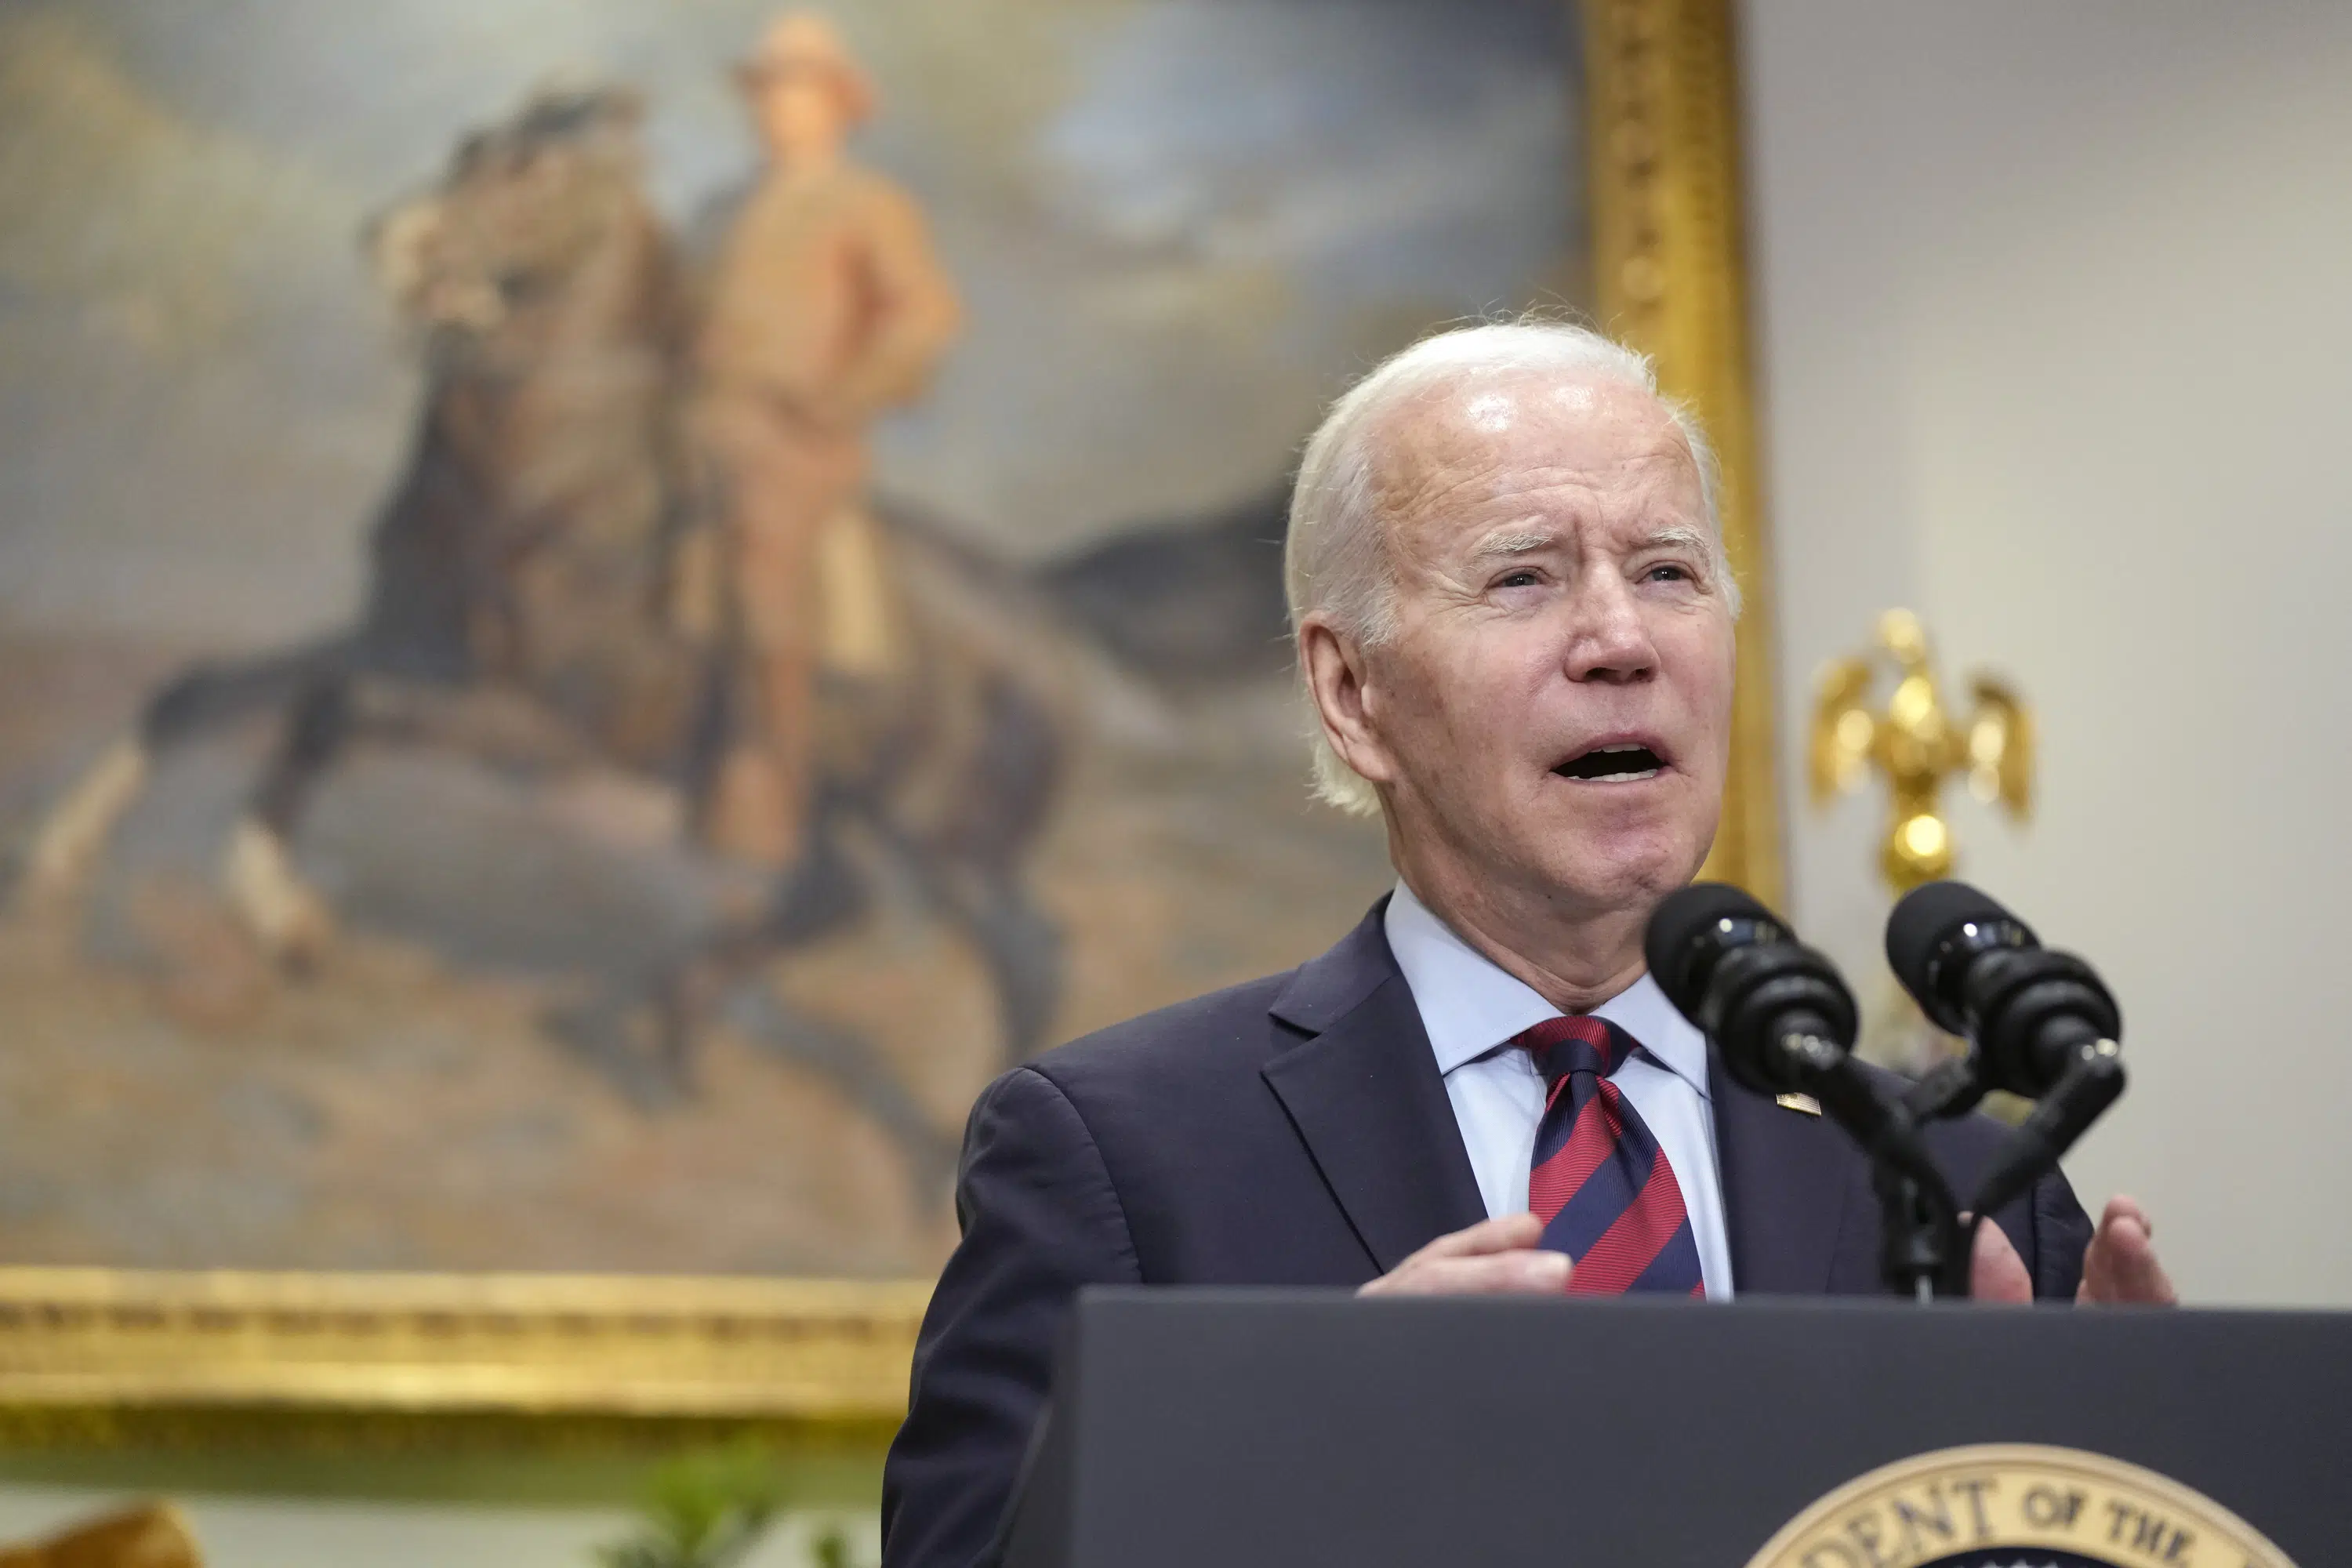 Biden sees economy avoiding recession, but risks remain